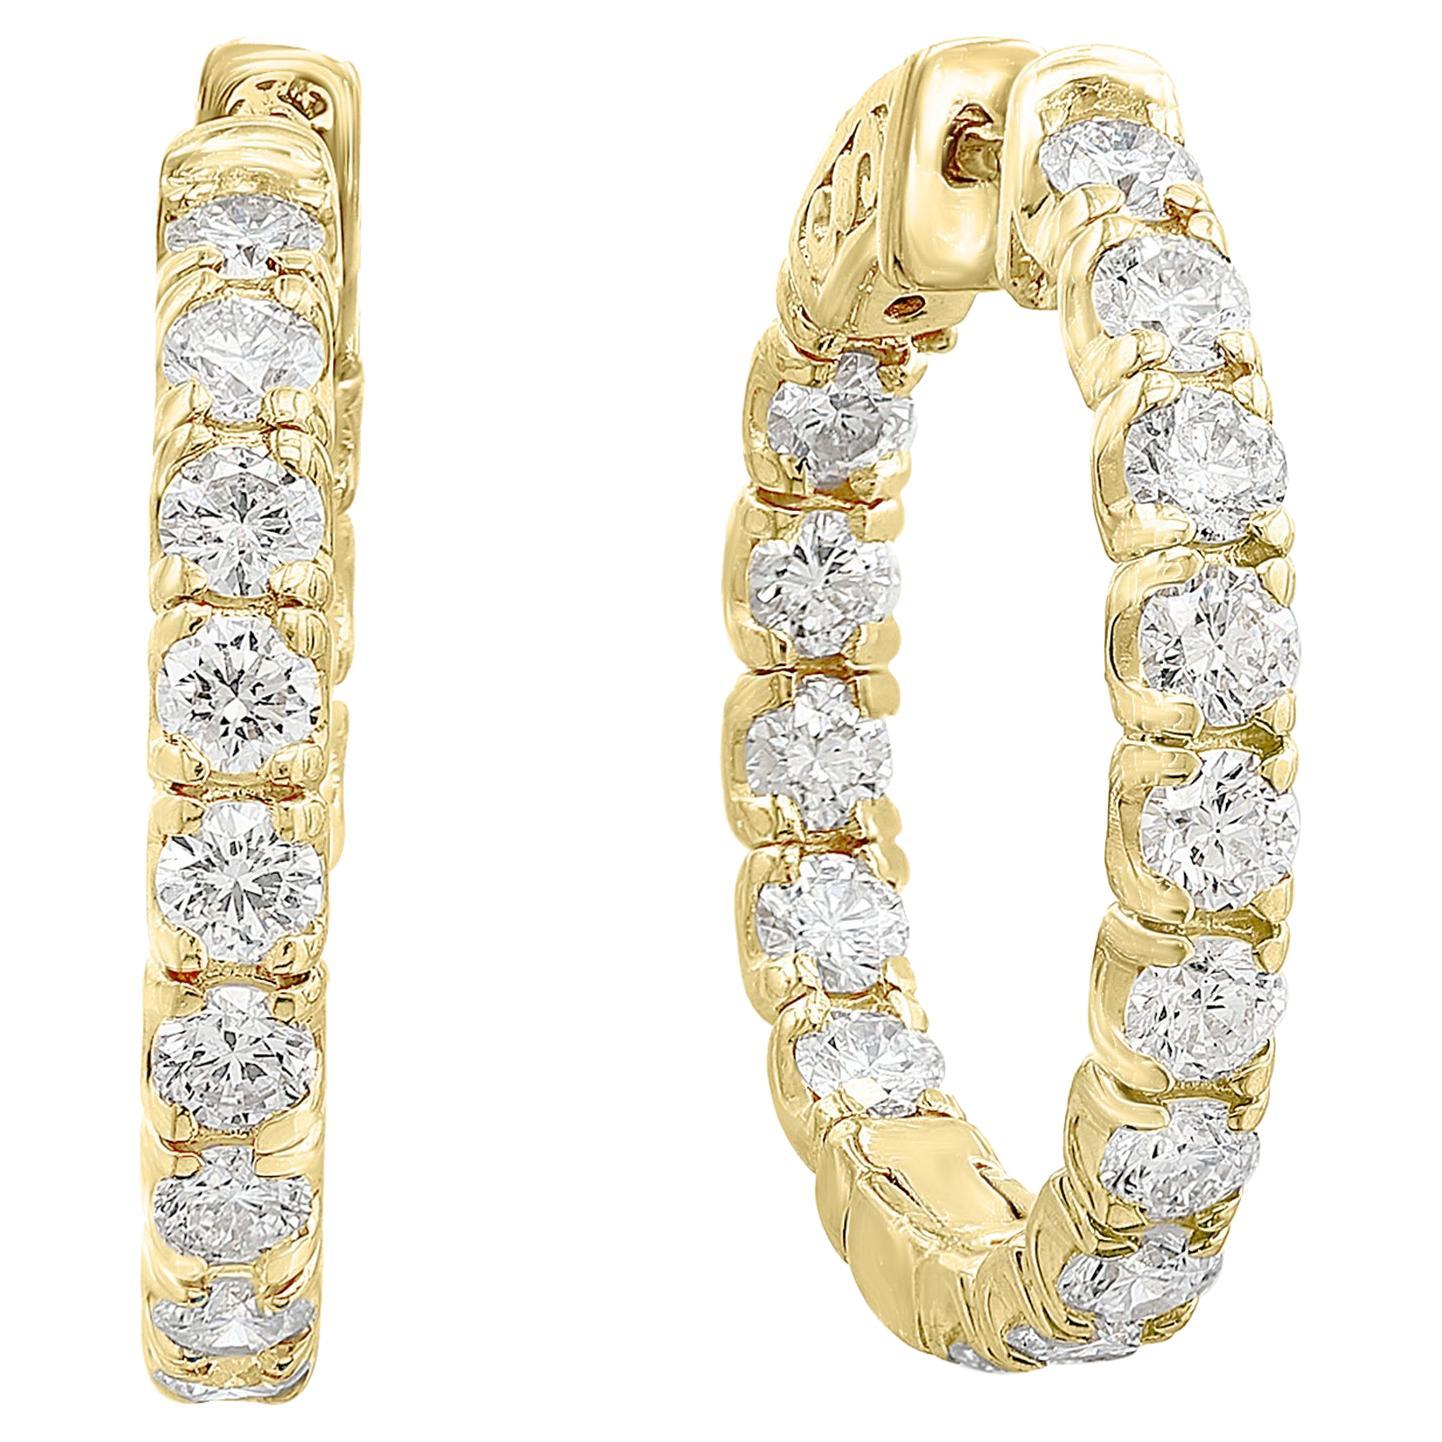 2.03 Carat Round Cut Diamond Hoop Earrings in 14K Yellow Gold For Sale